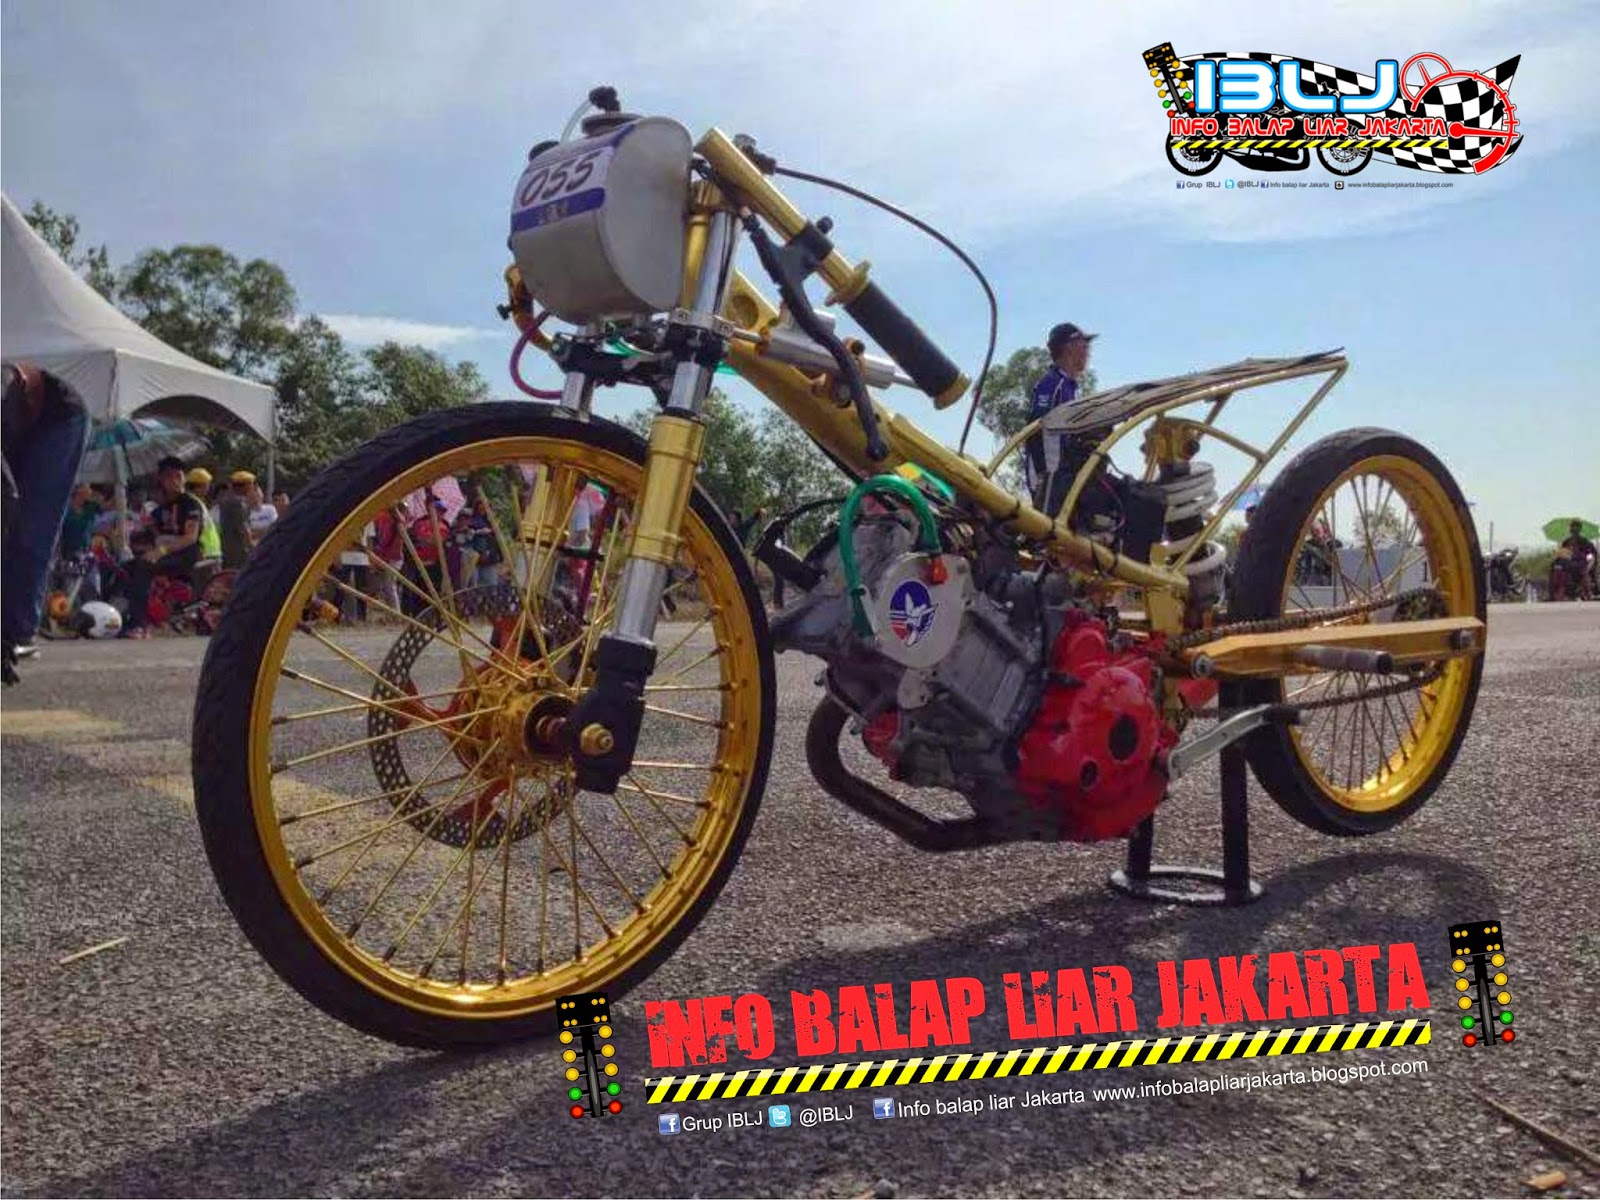 Akarta Jupiter Mx Pemegang Rekor Drag Bike Malaysia 6553 Detik